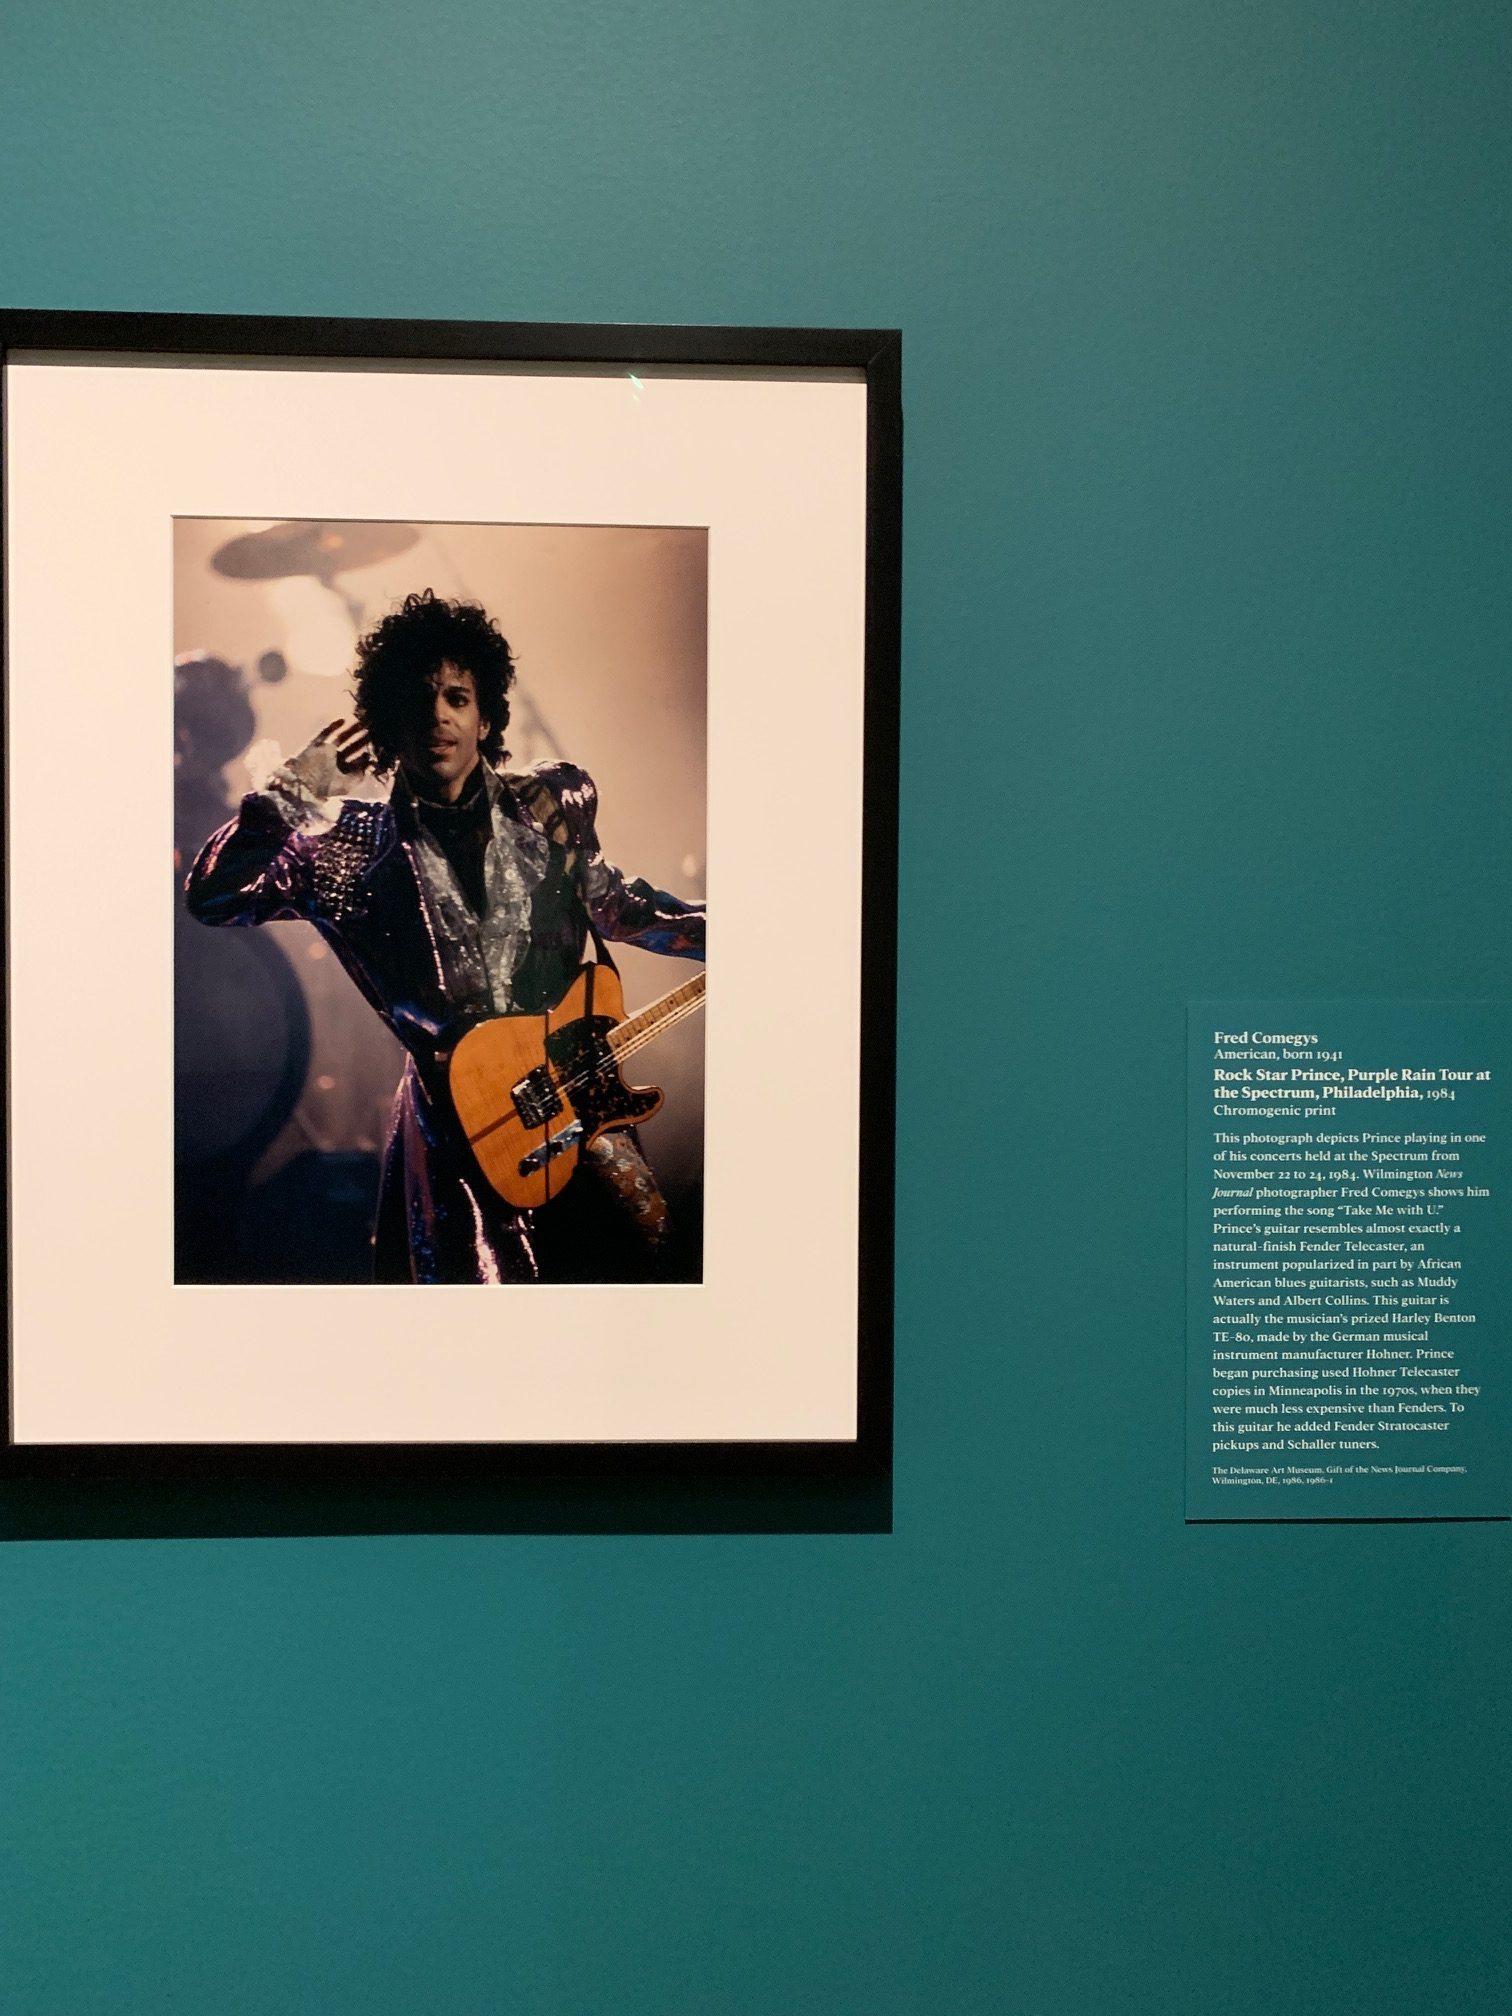 Fred Comegys chromogenic print, “Rock Star Prince, Purple Rain Tour at the Spectrum, Philadelphia,” 1984. At "Storied Strings," VMFA.